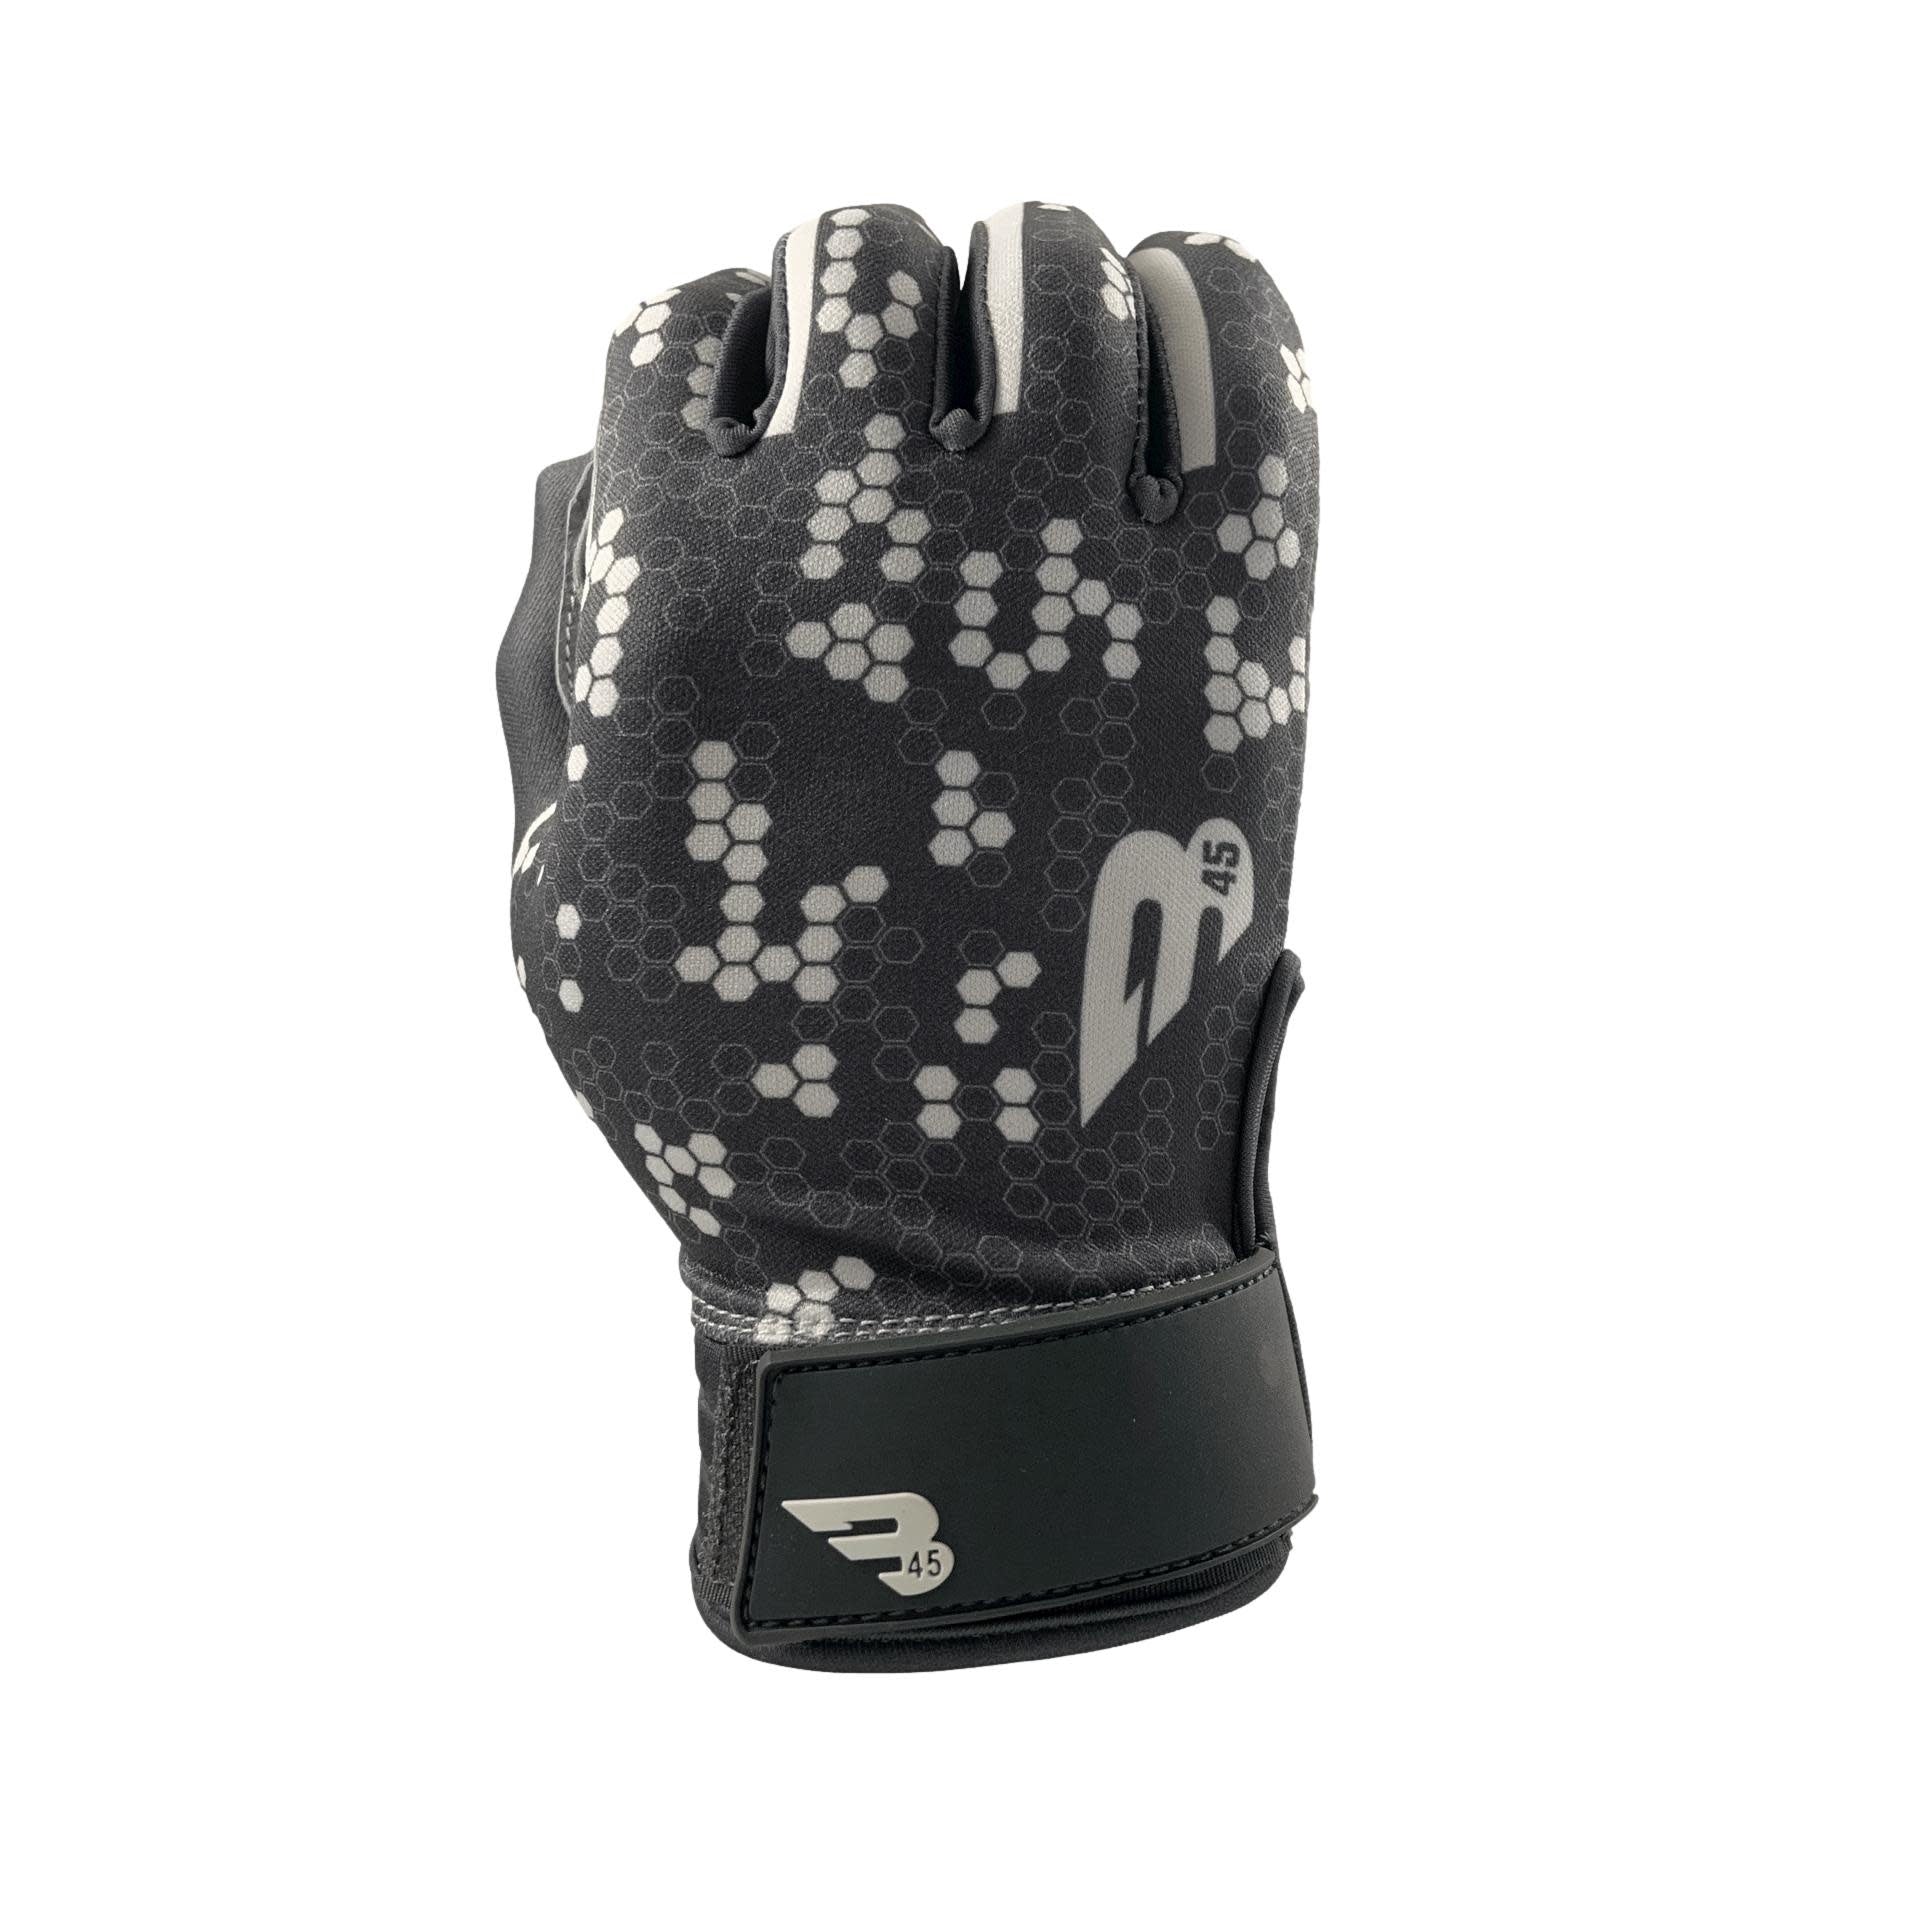 B45 Batting Gloves